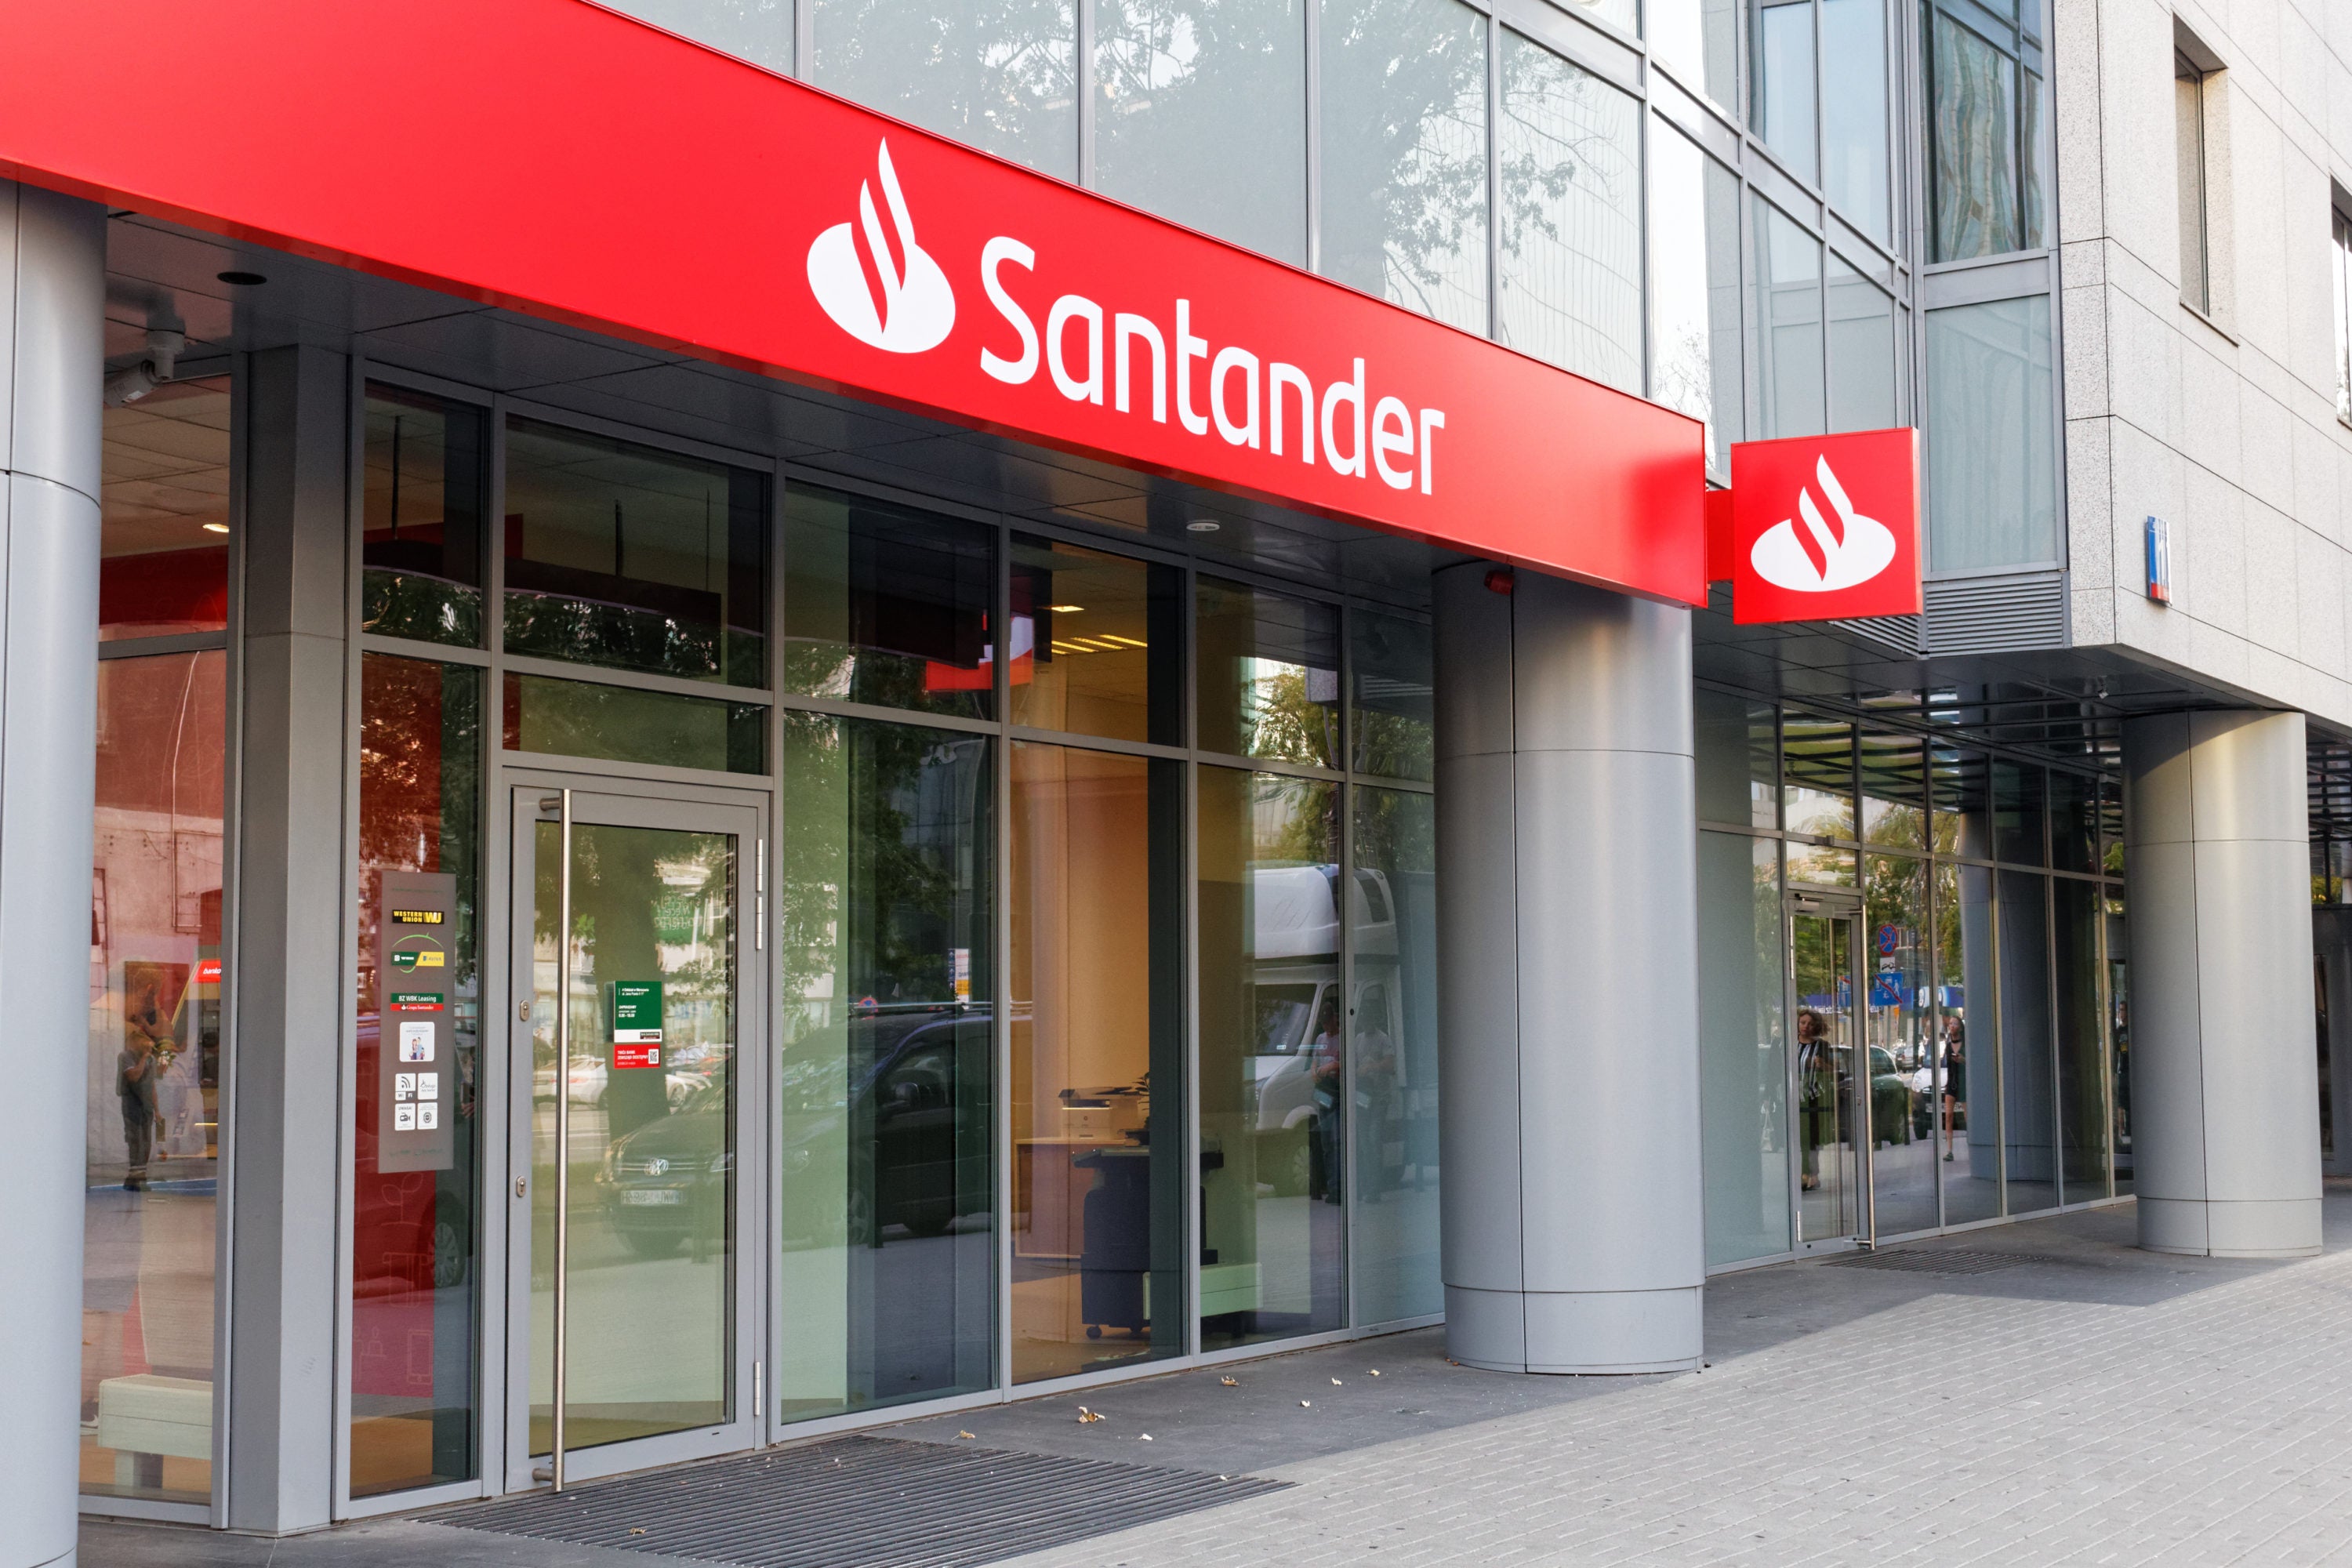 Santander Bank branch